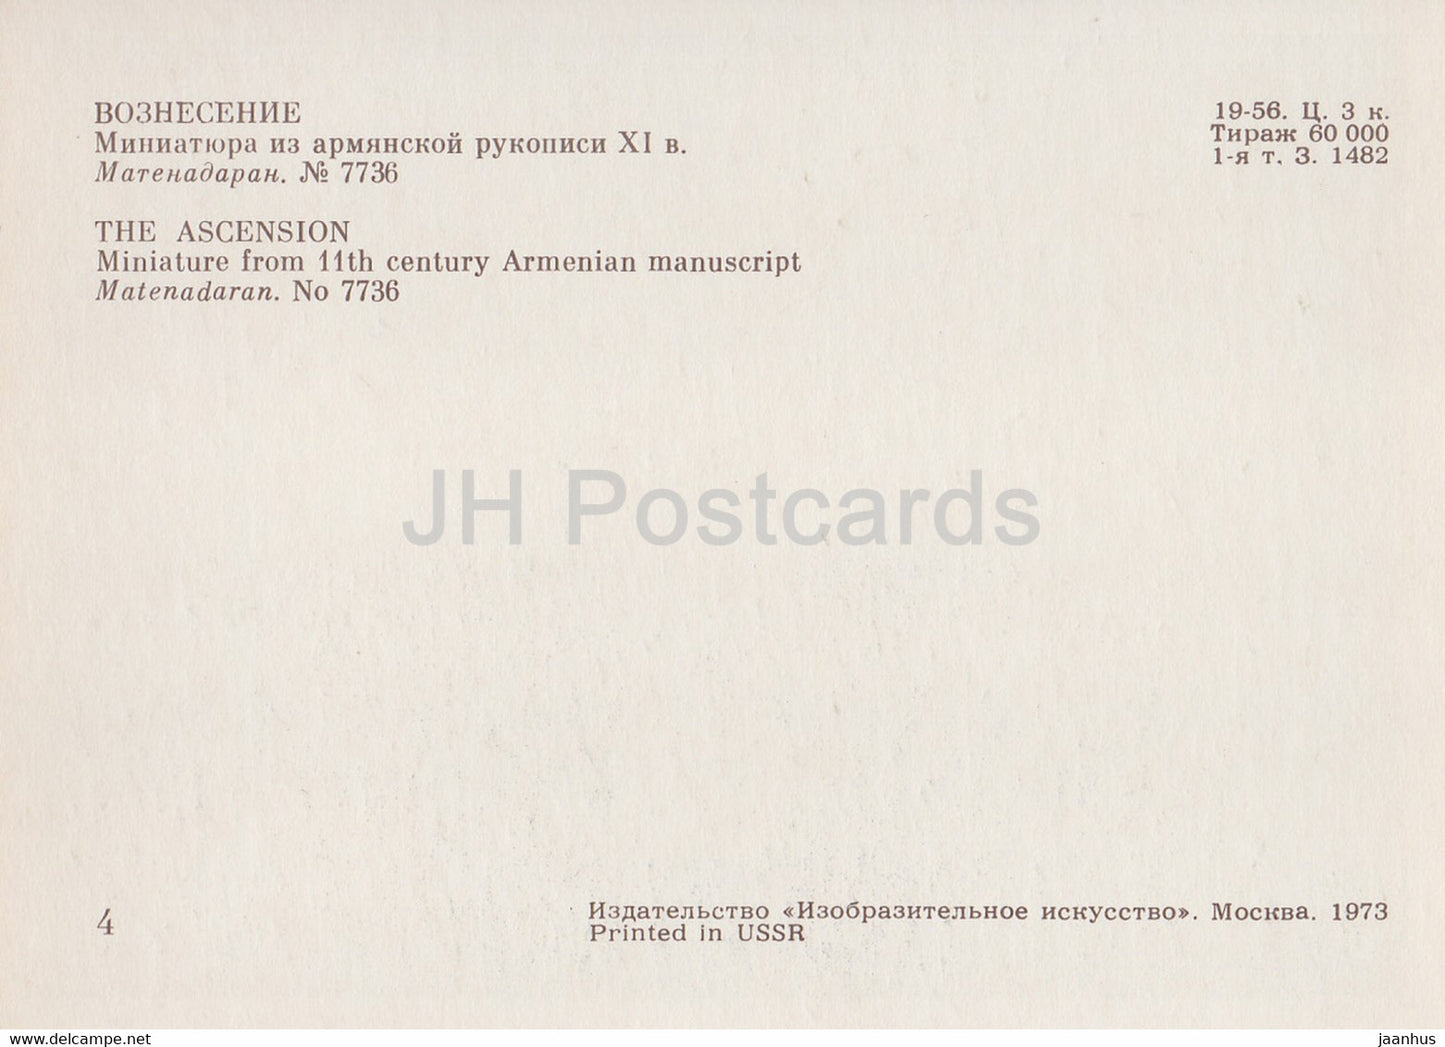 Miniatures dans les manuscrits arméniens - L'Ascension - Matenadaran - Arménie - 1973 - Russie URSS - inutilisé